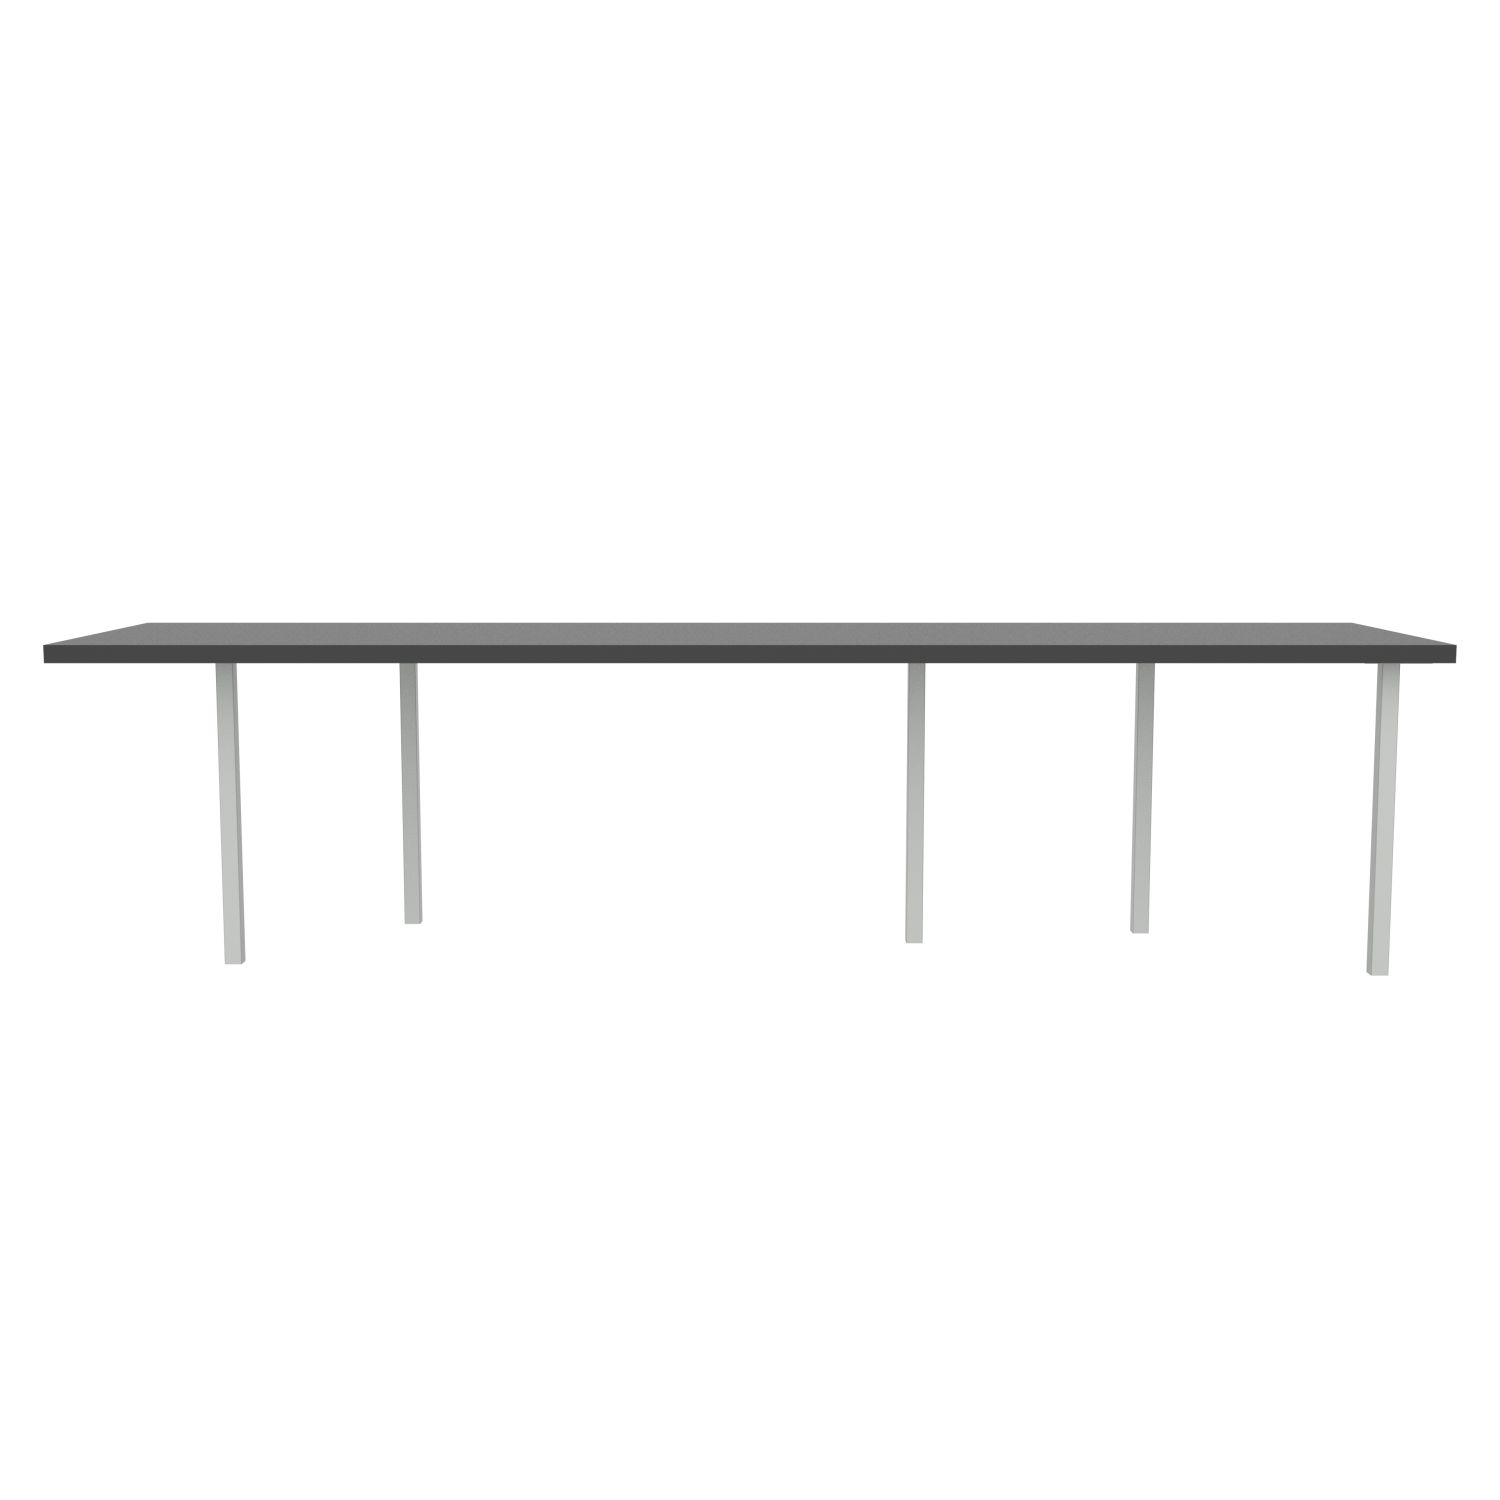 lensvelt bbrand table five fixed heigt 80x310 hpl black 50 mm price level 1 light grey ral7035